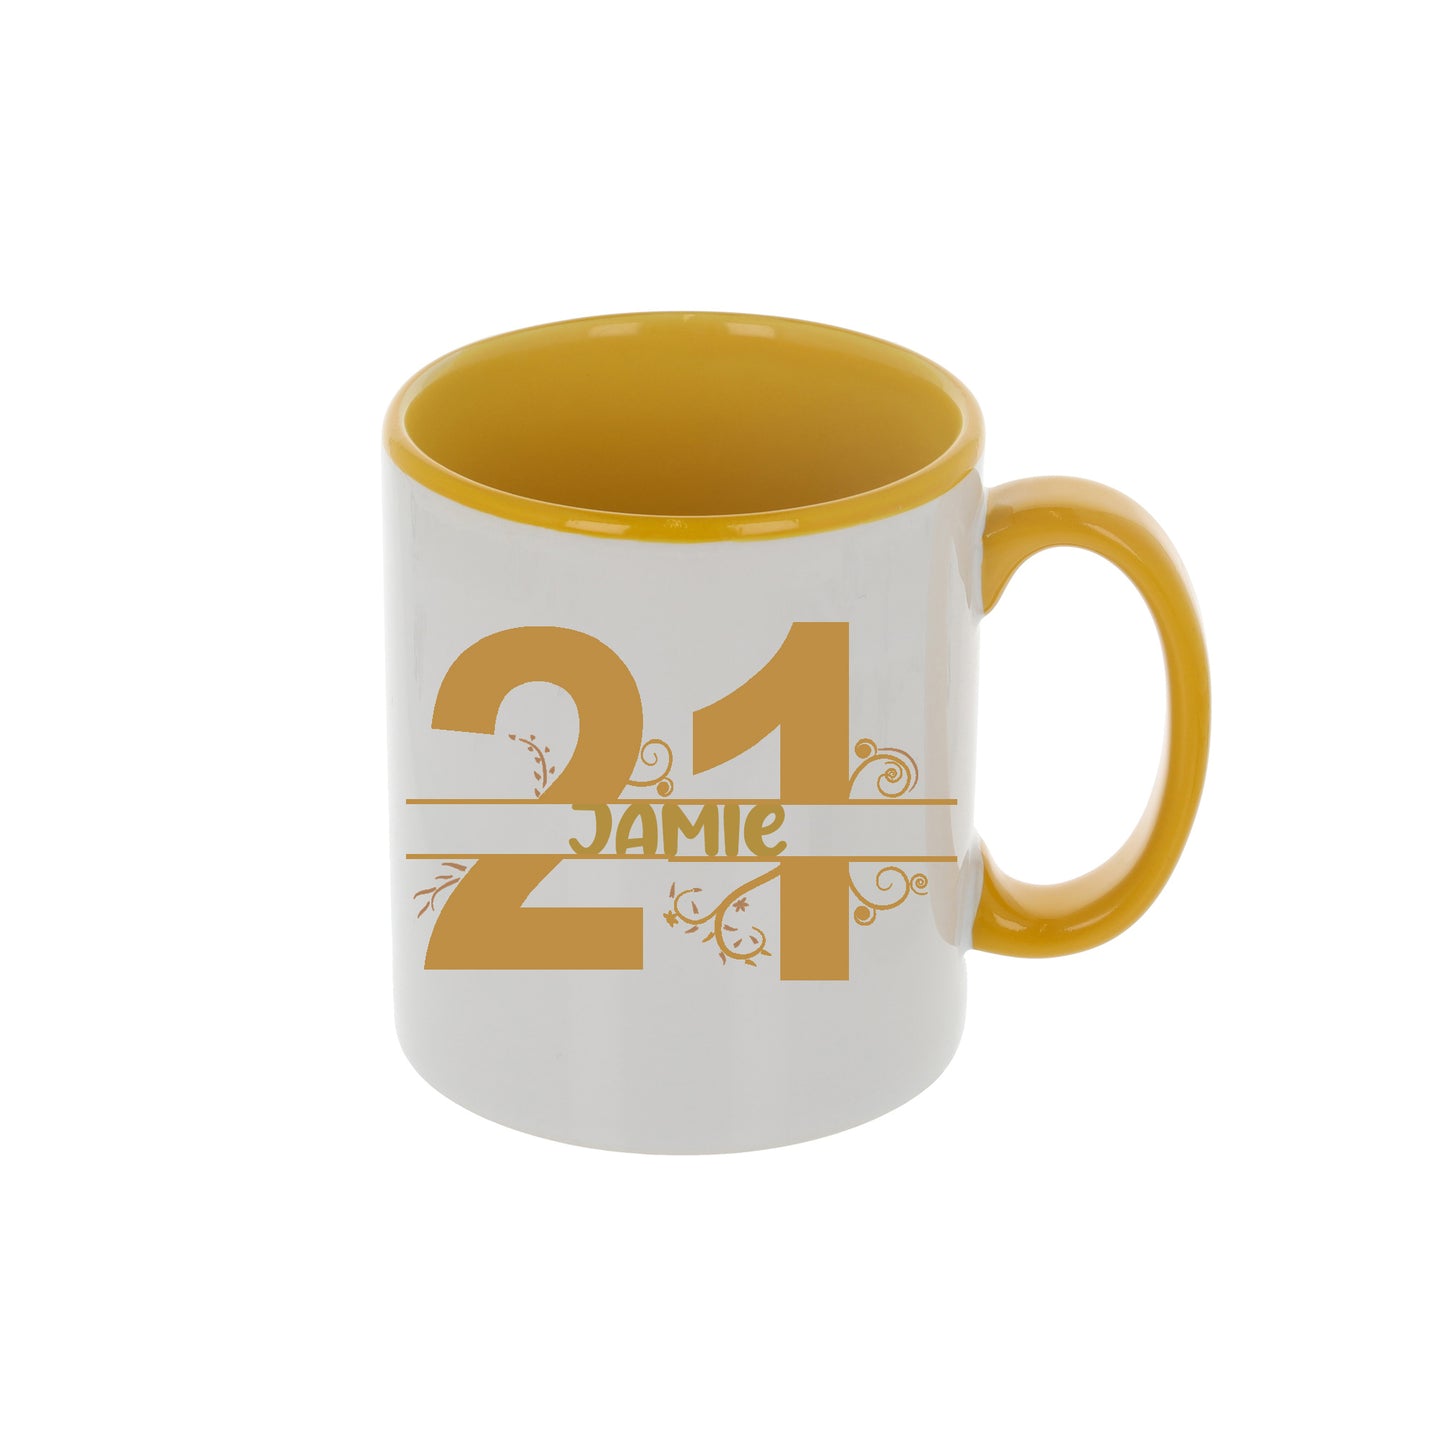 Personalised Filled 21st Birthday Mug  - Always Looking Good - Yellow Mug Only  